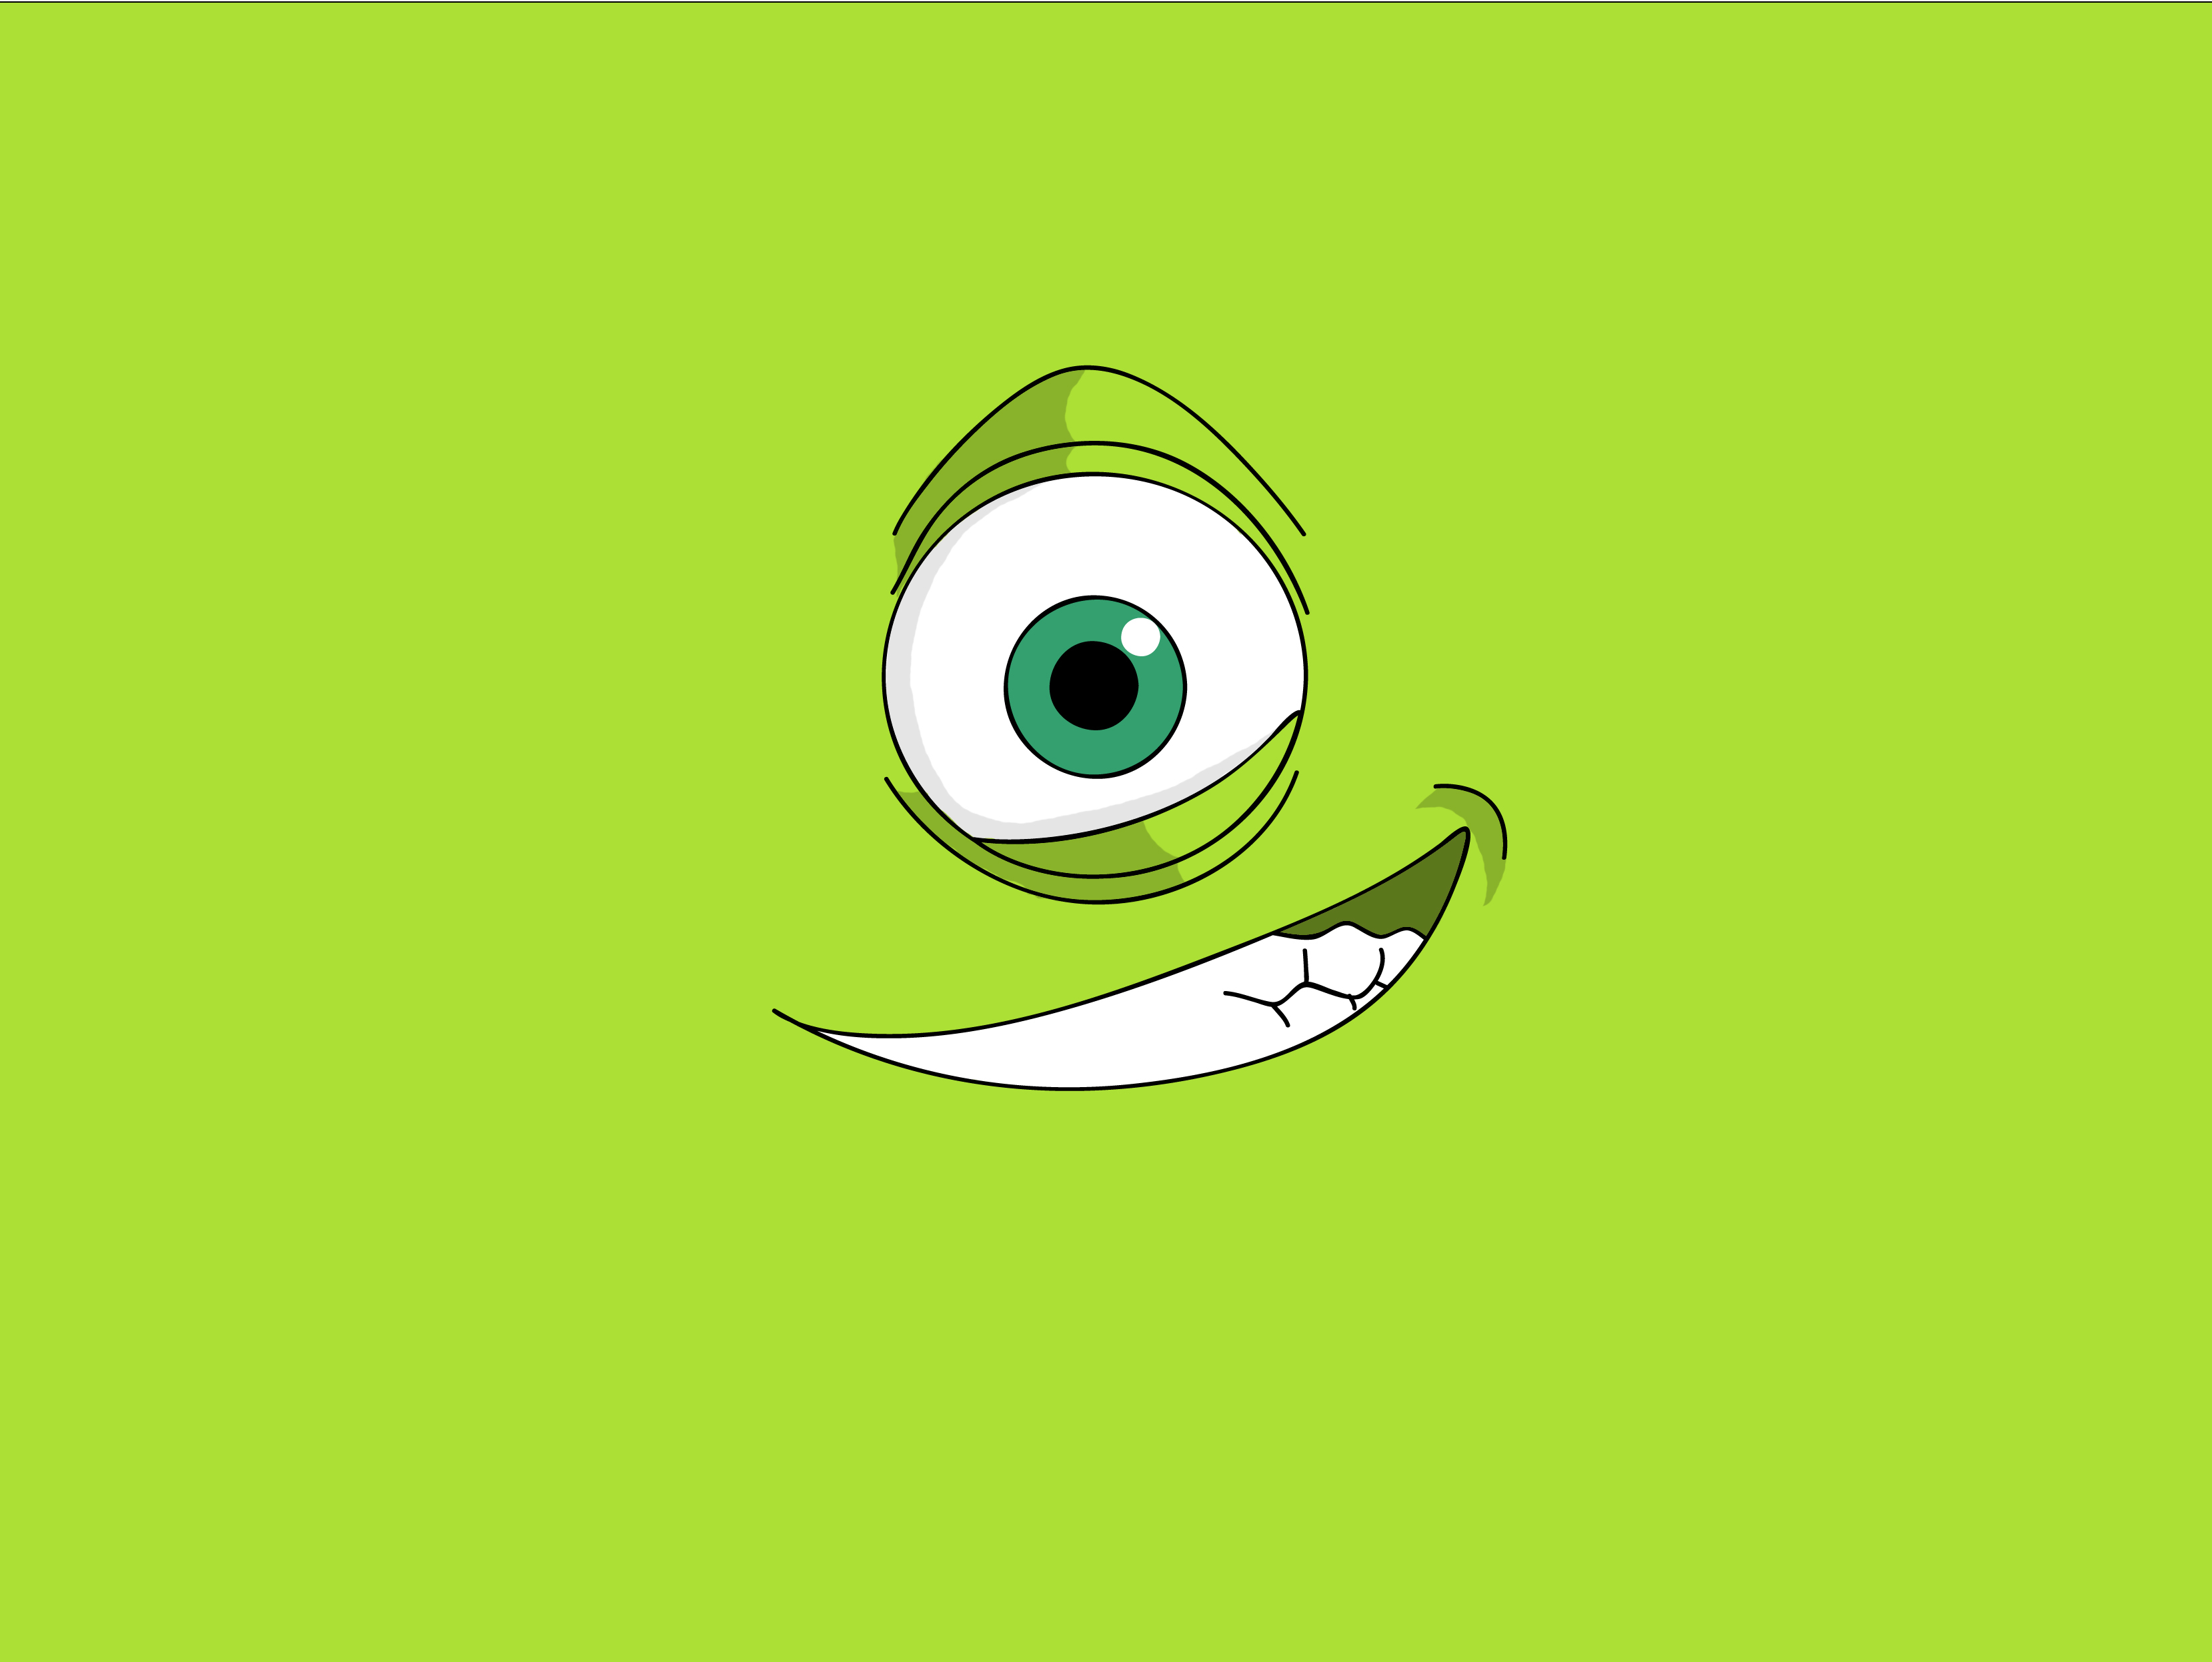 monster inc wallpaper hd,green,cartoon,eye,smile,illustration